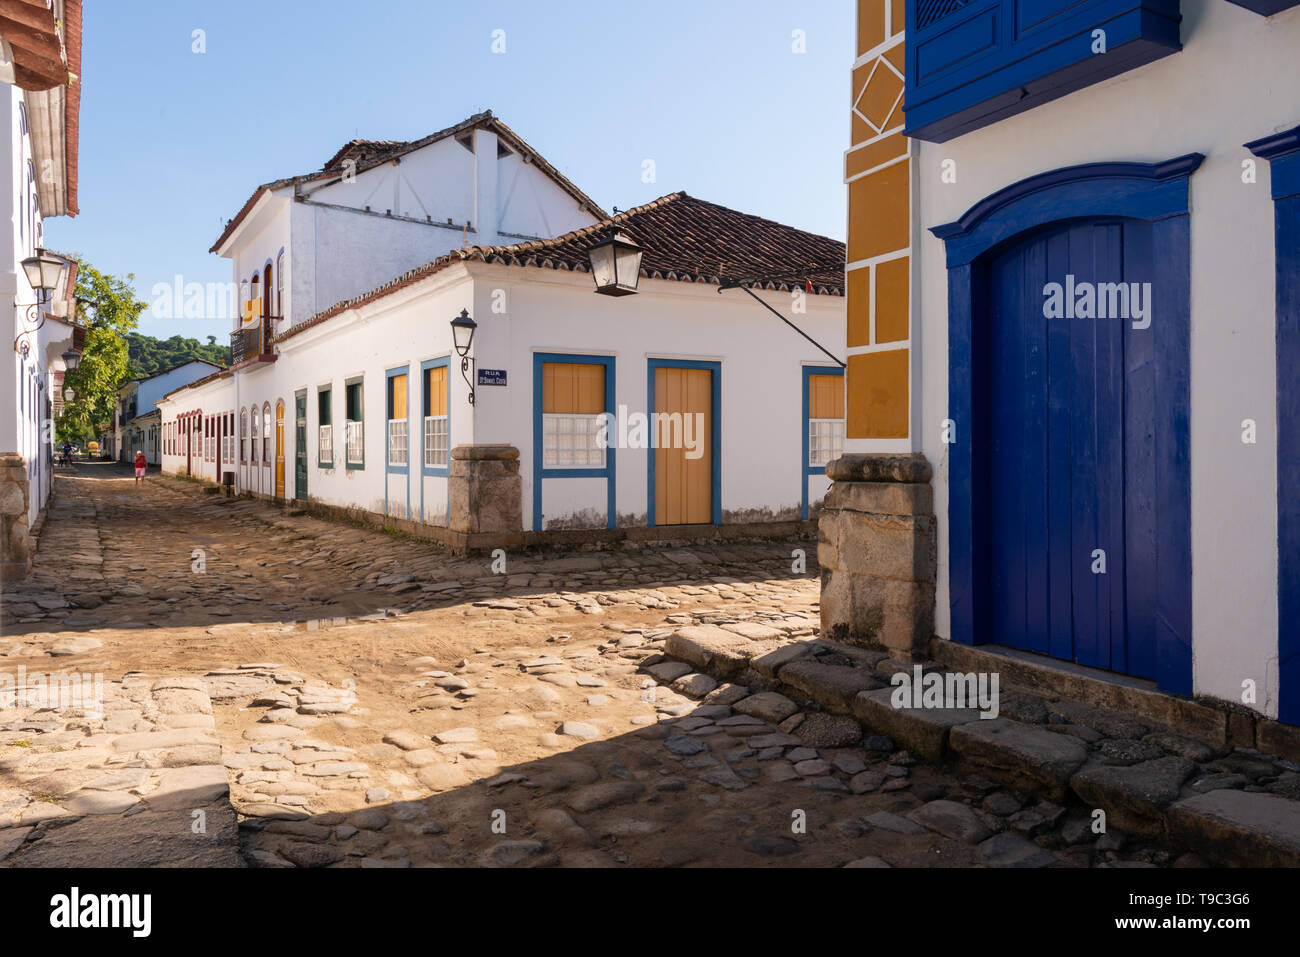 The streets of Paraty, a historic town in Rio de Janeiro, Brazil Stock Photo